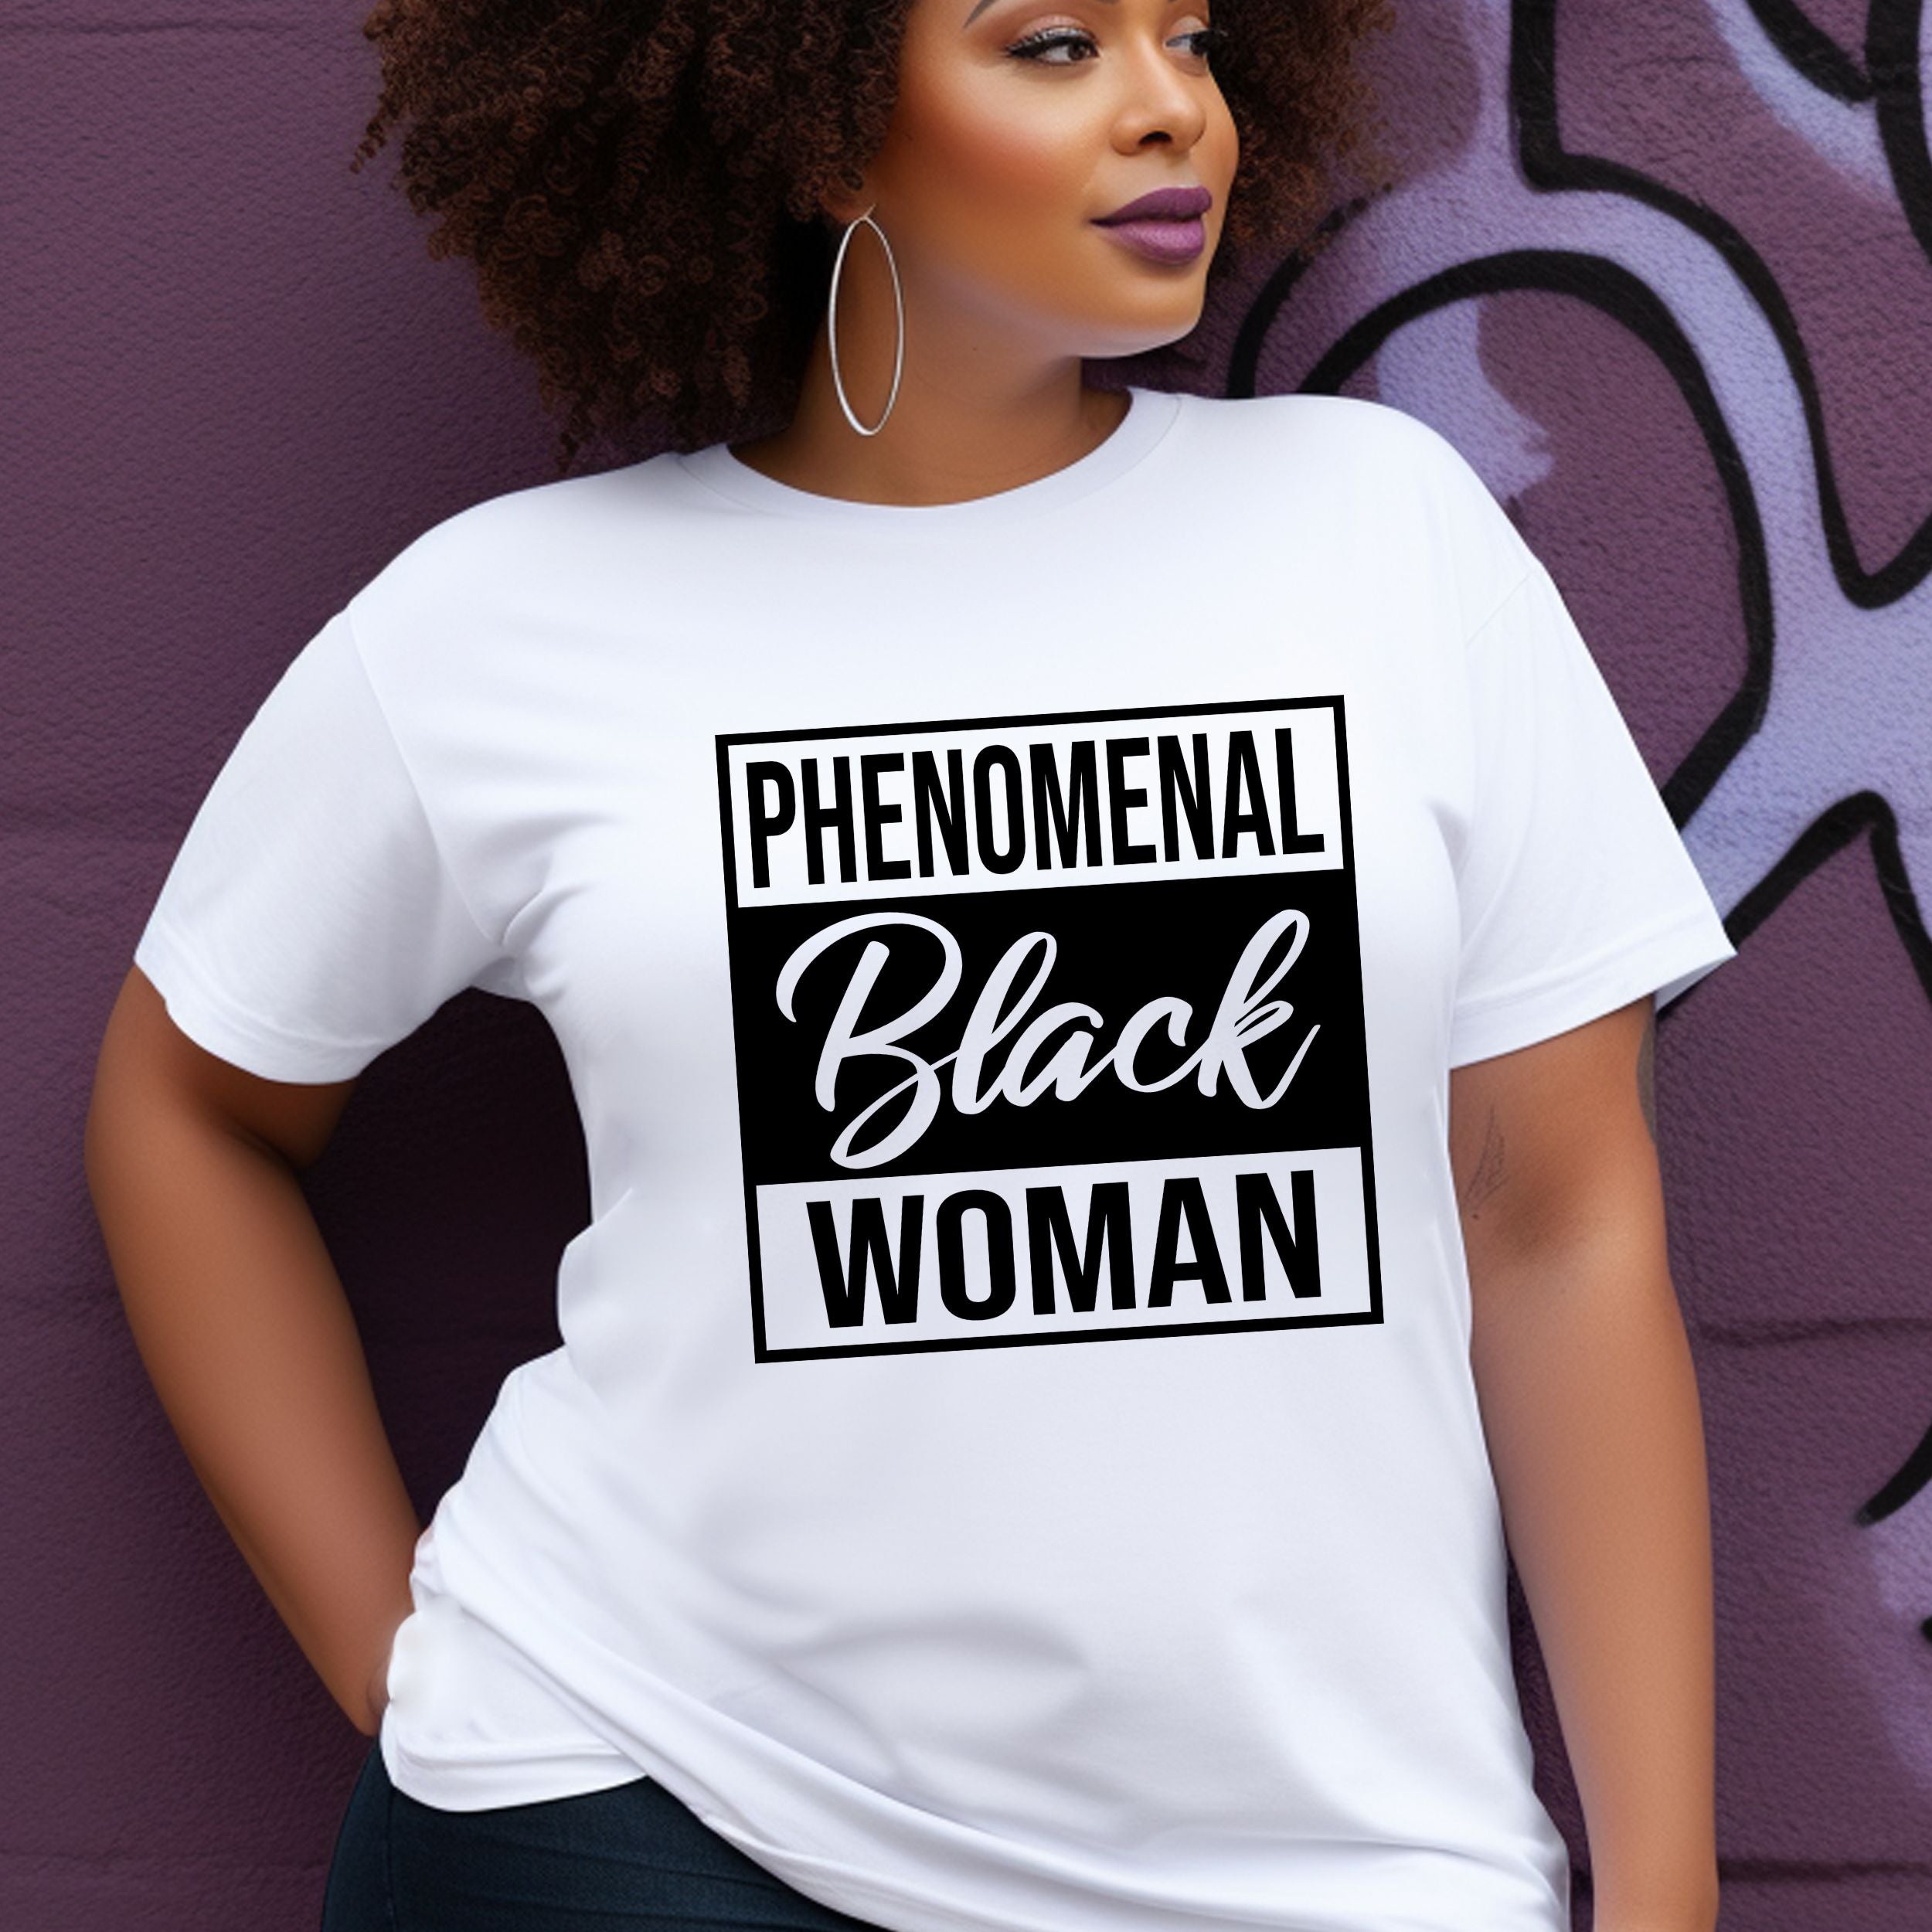 Phenomenal Woman Shirt - Black Women Empowerment